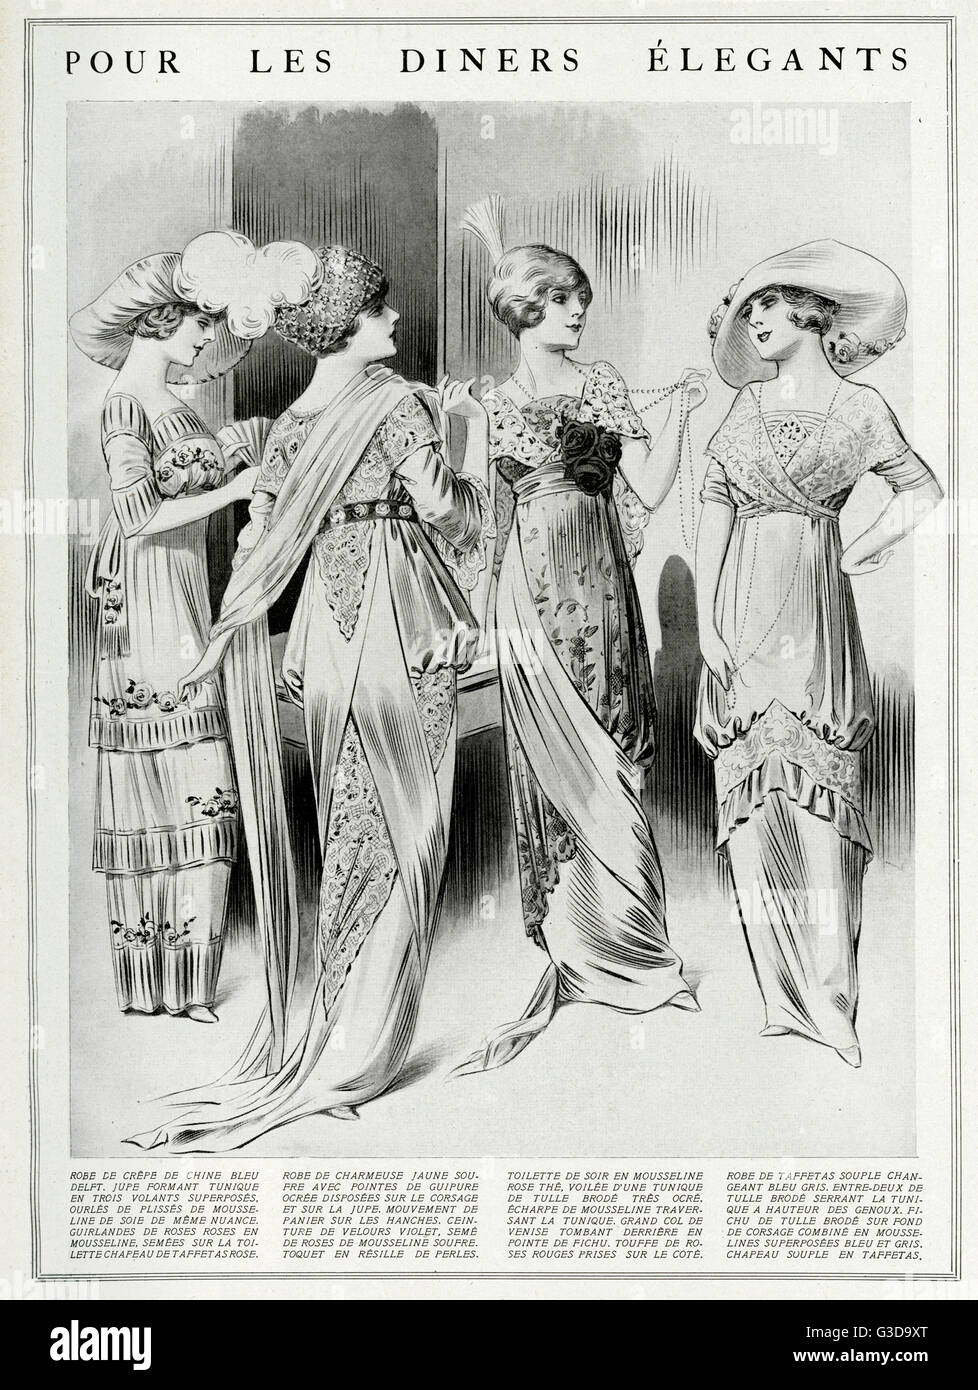 Four women wearing fashionable high waist tunic dining dresses. Date: 1912  Stock Photo - Alamy